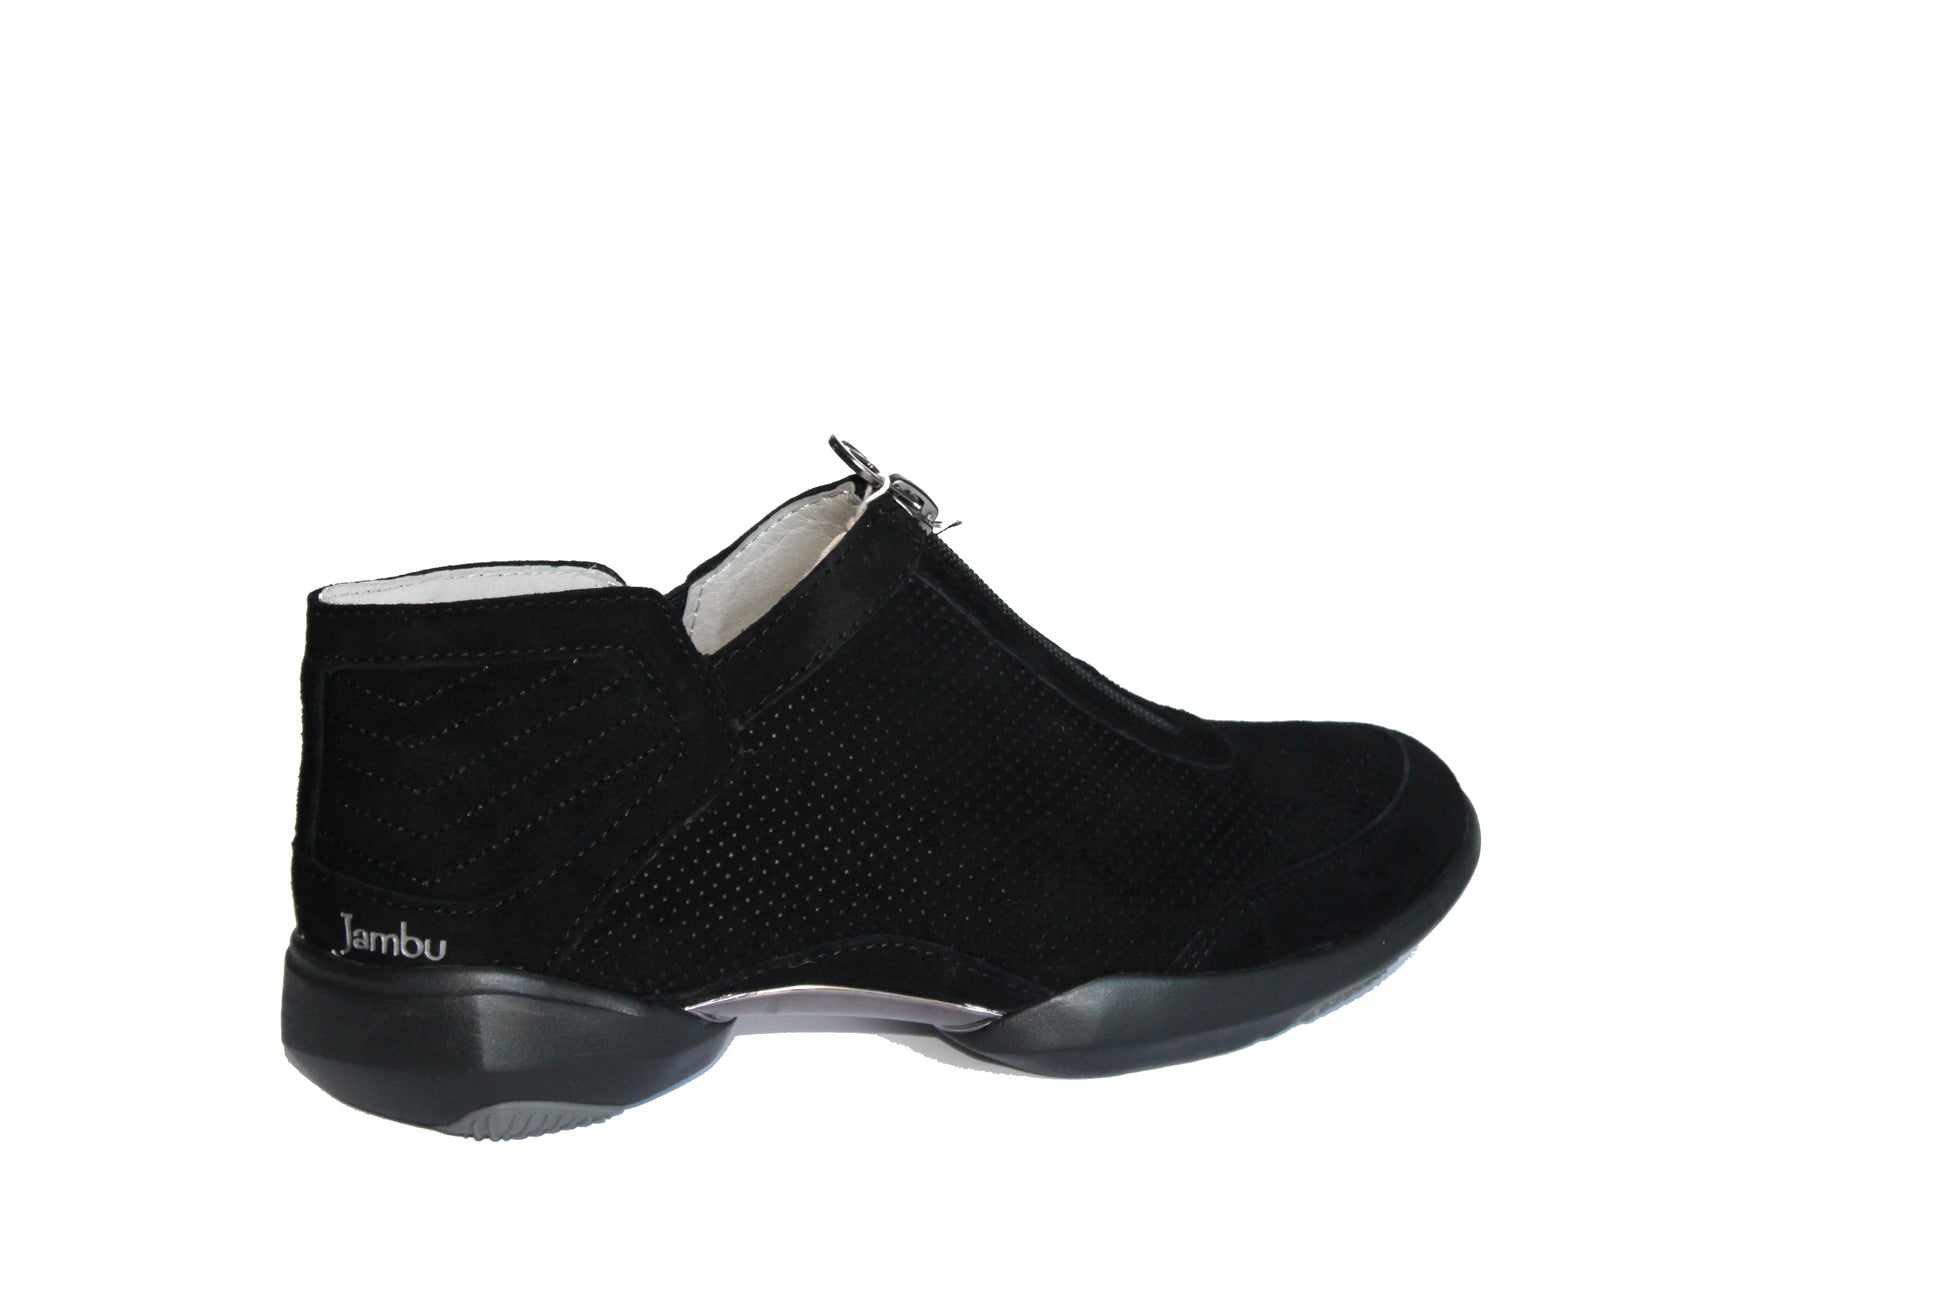 top zipper closure, sued upper, leather lining, memory foam foot-bed for comfort & padded comfort heel